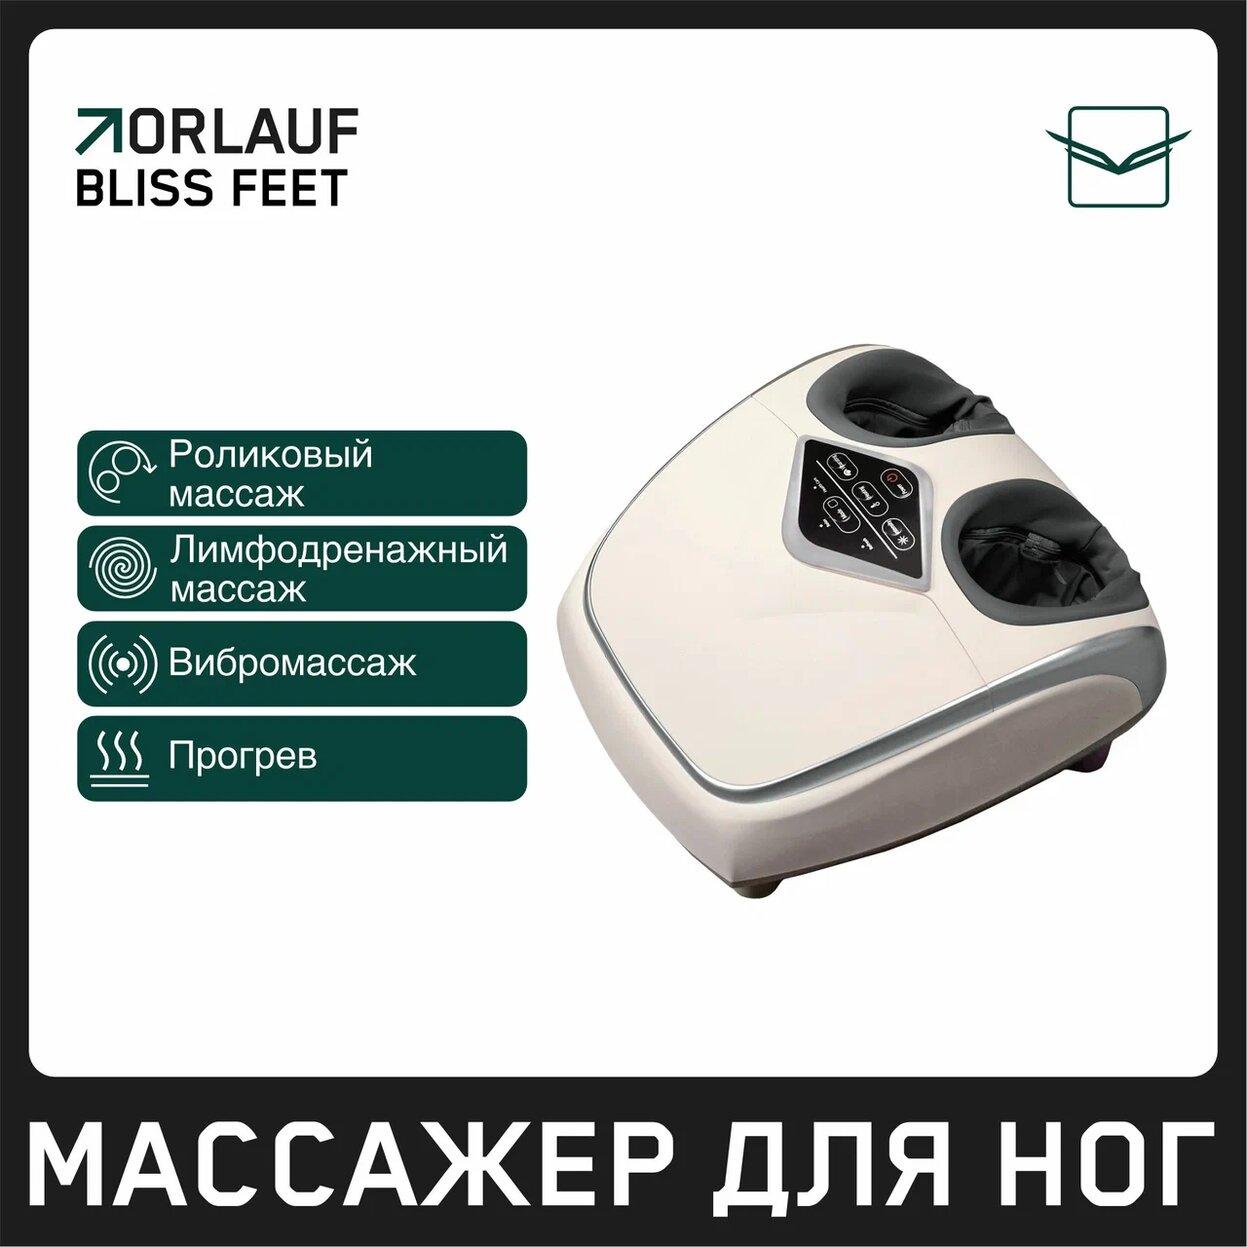 Orlauf Bliss Feet из каталога массажеров в Челябинске по цене 27600 ₽